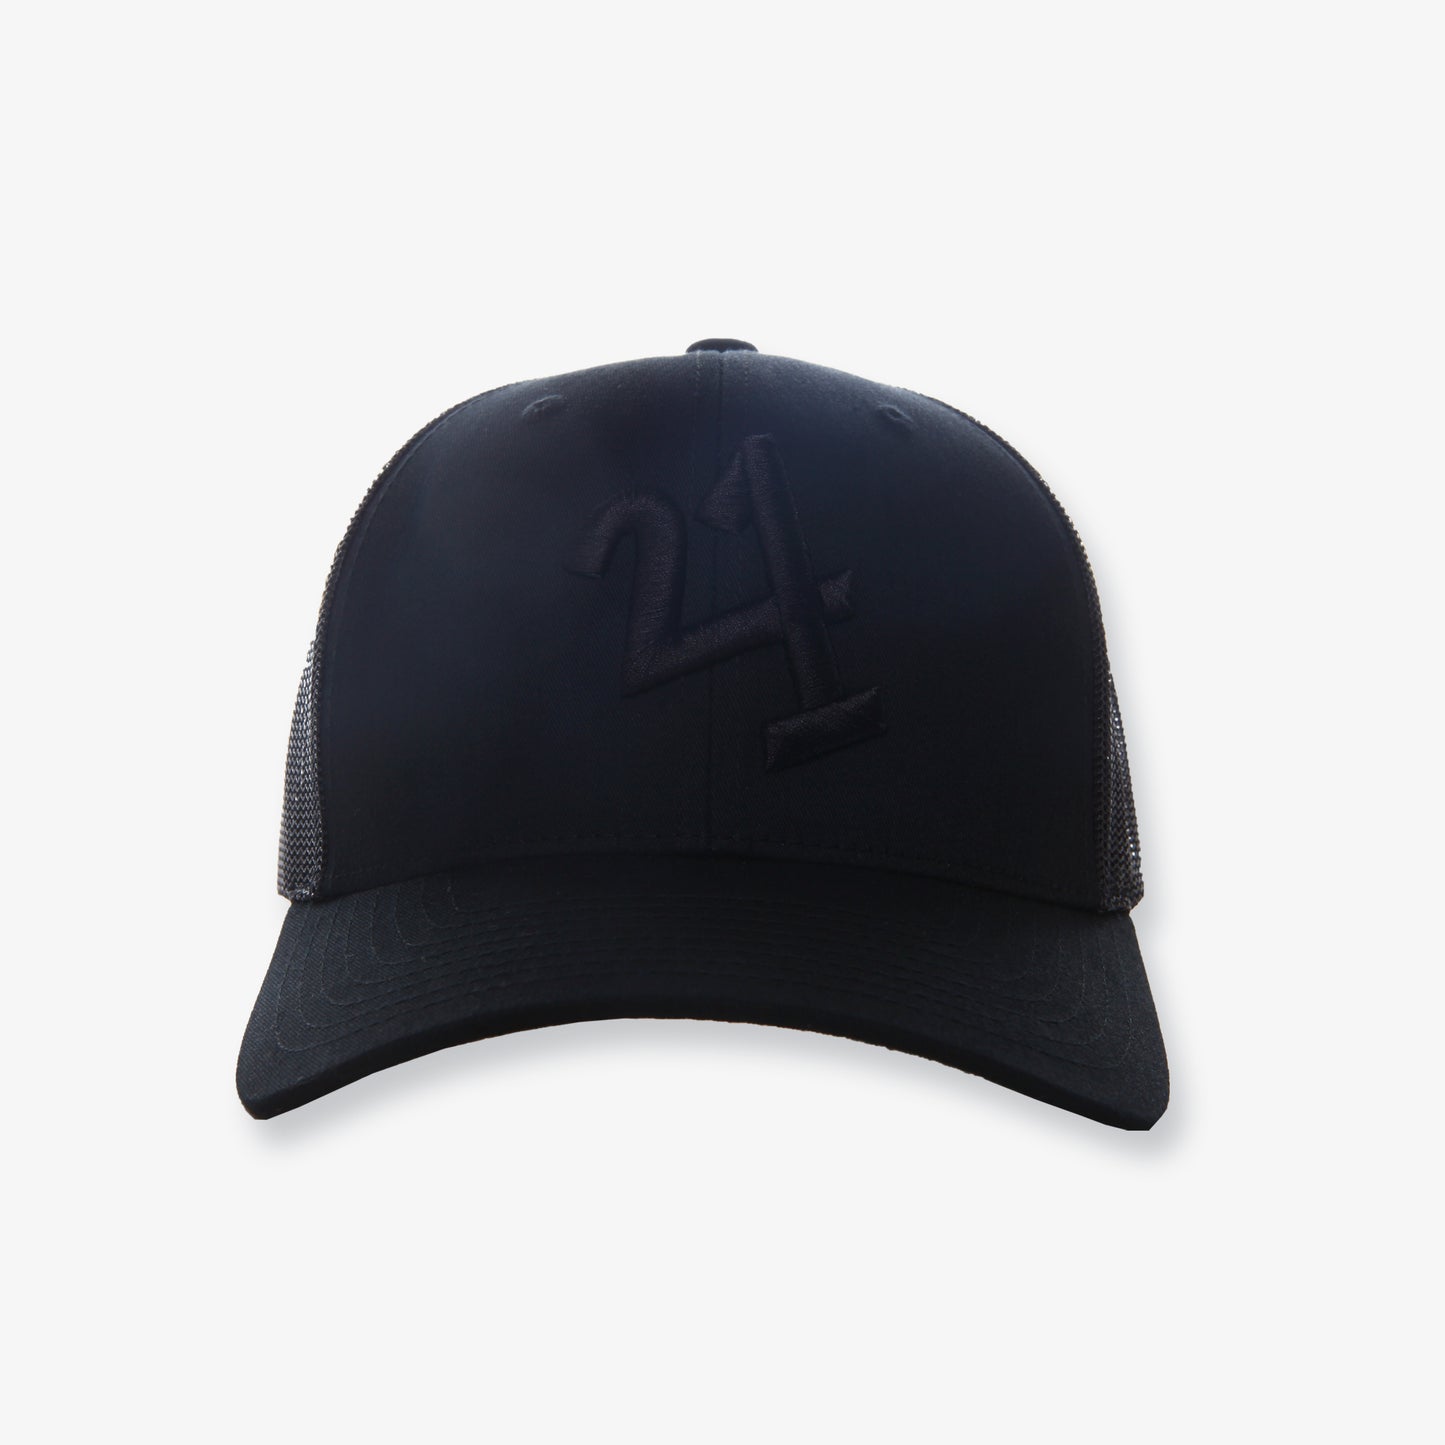 421 Mesh Hat - Black